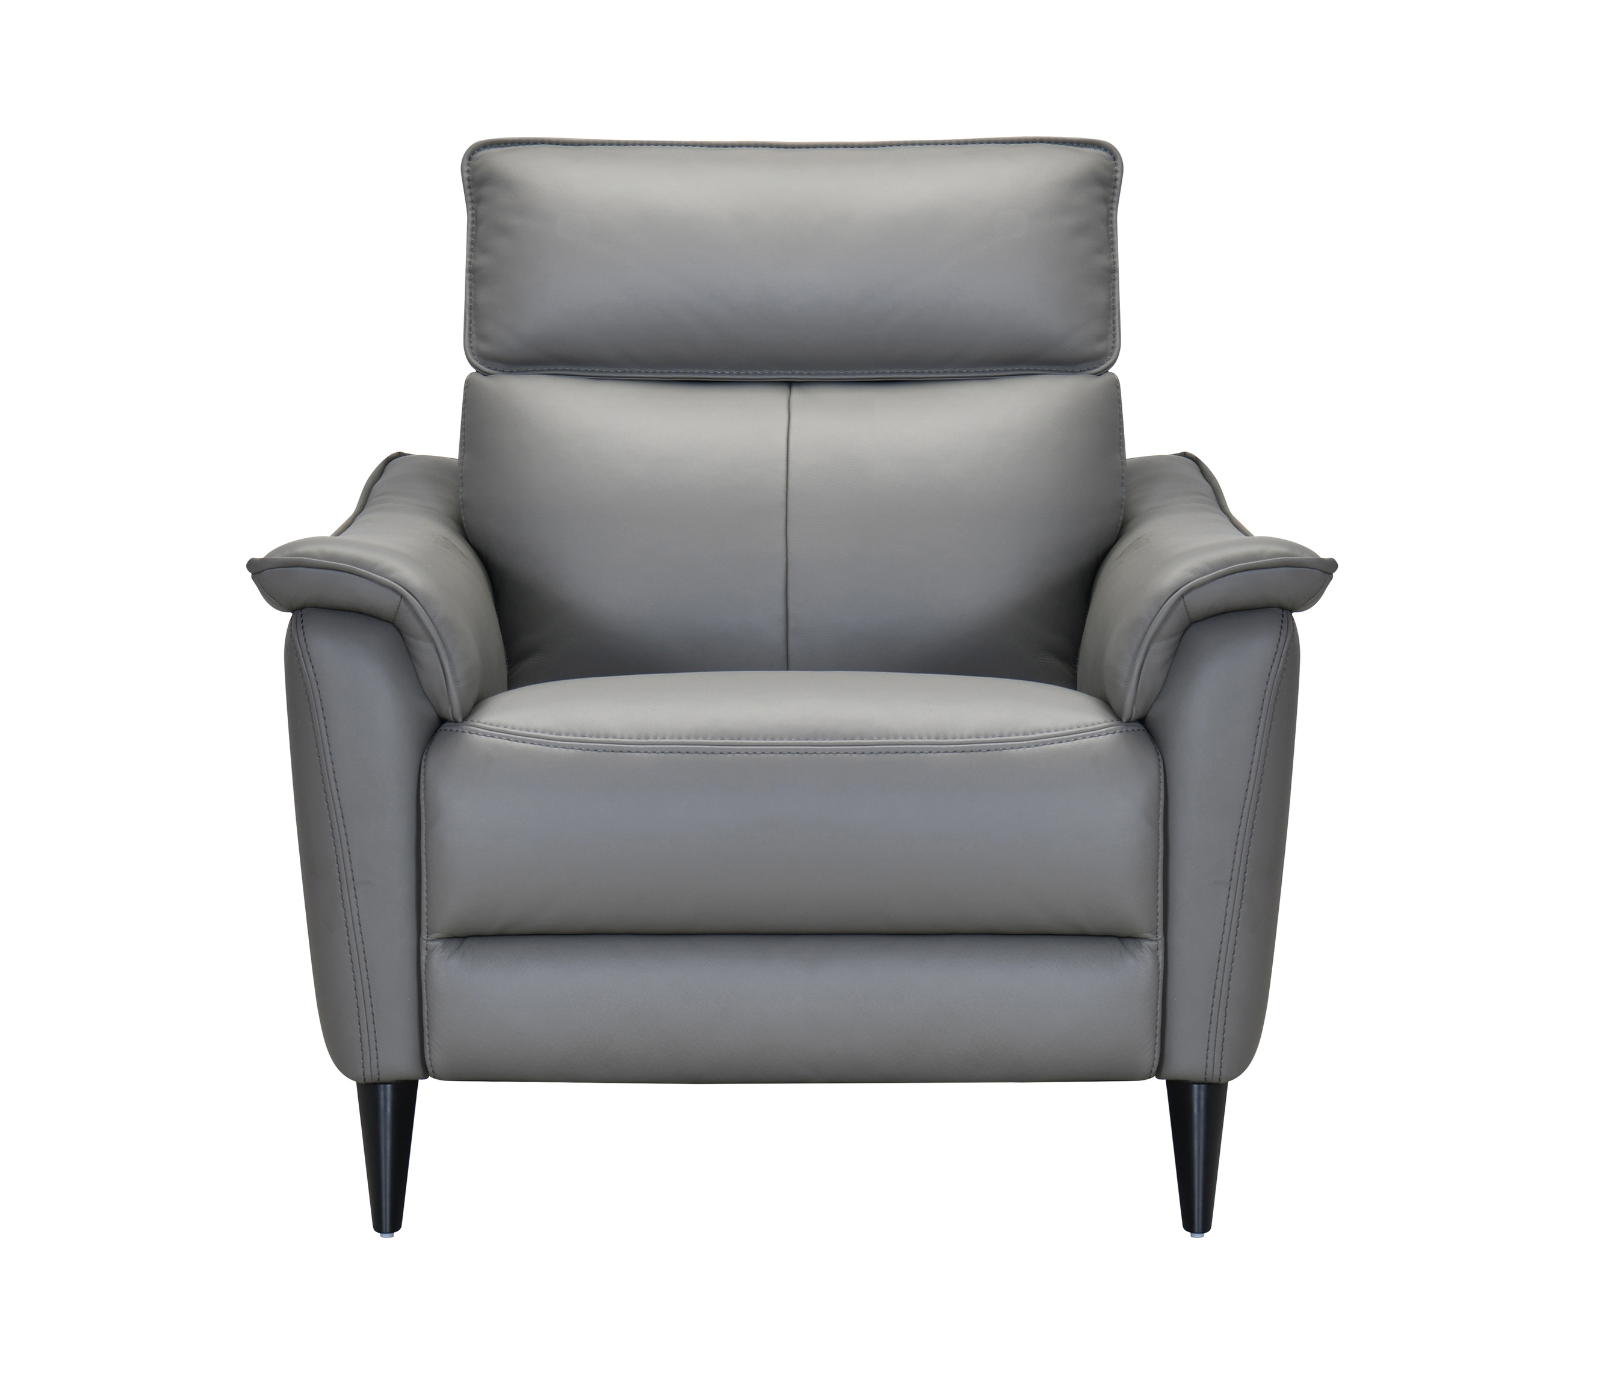 Marino Chair  - Power Reclining w/ Power Headrest - Dolphin Grey Leather